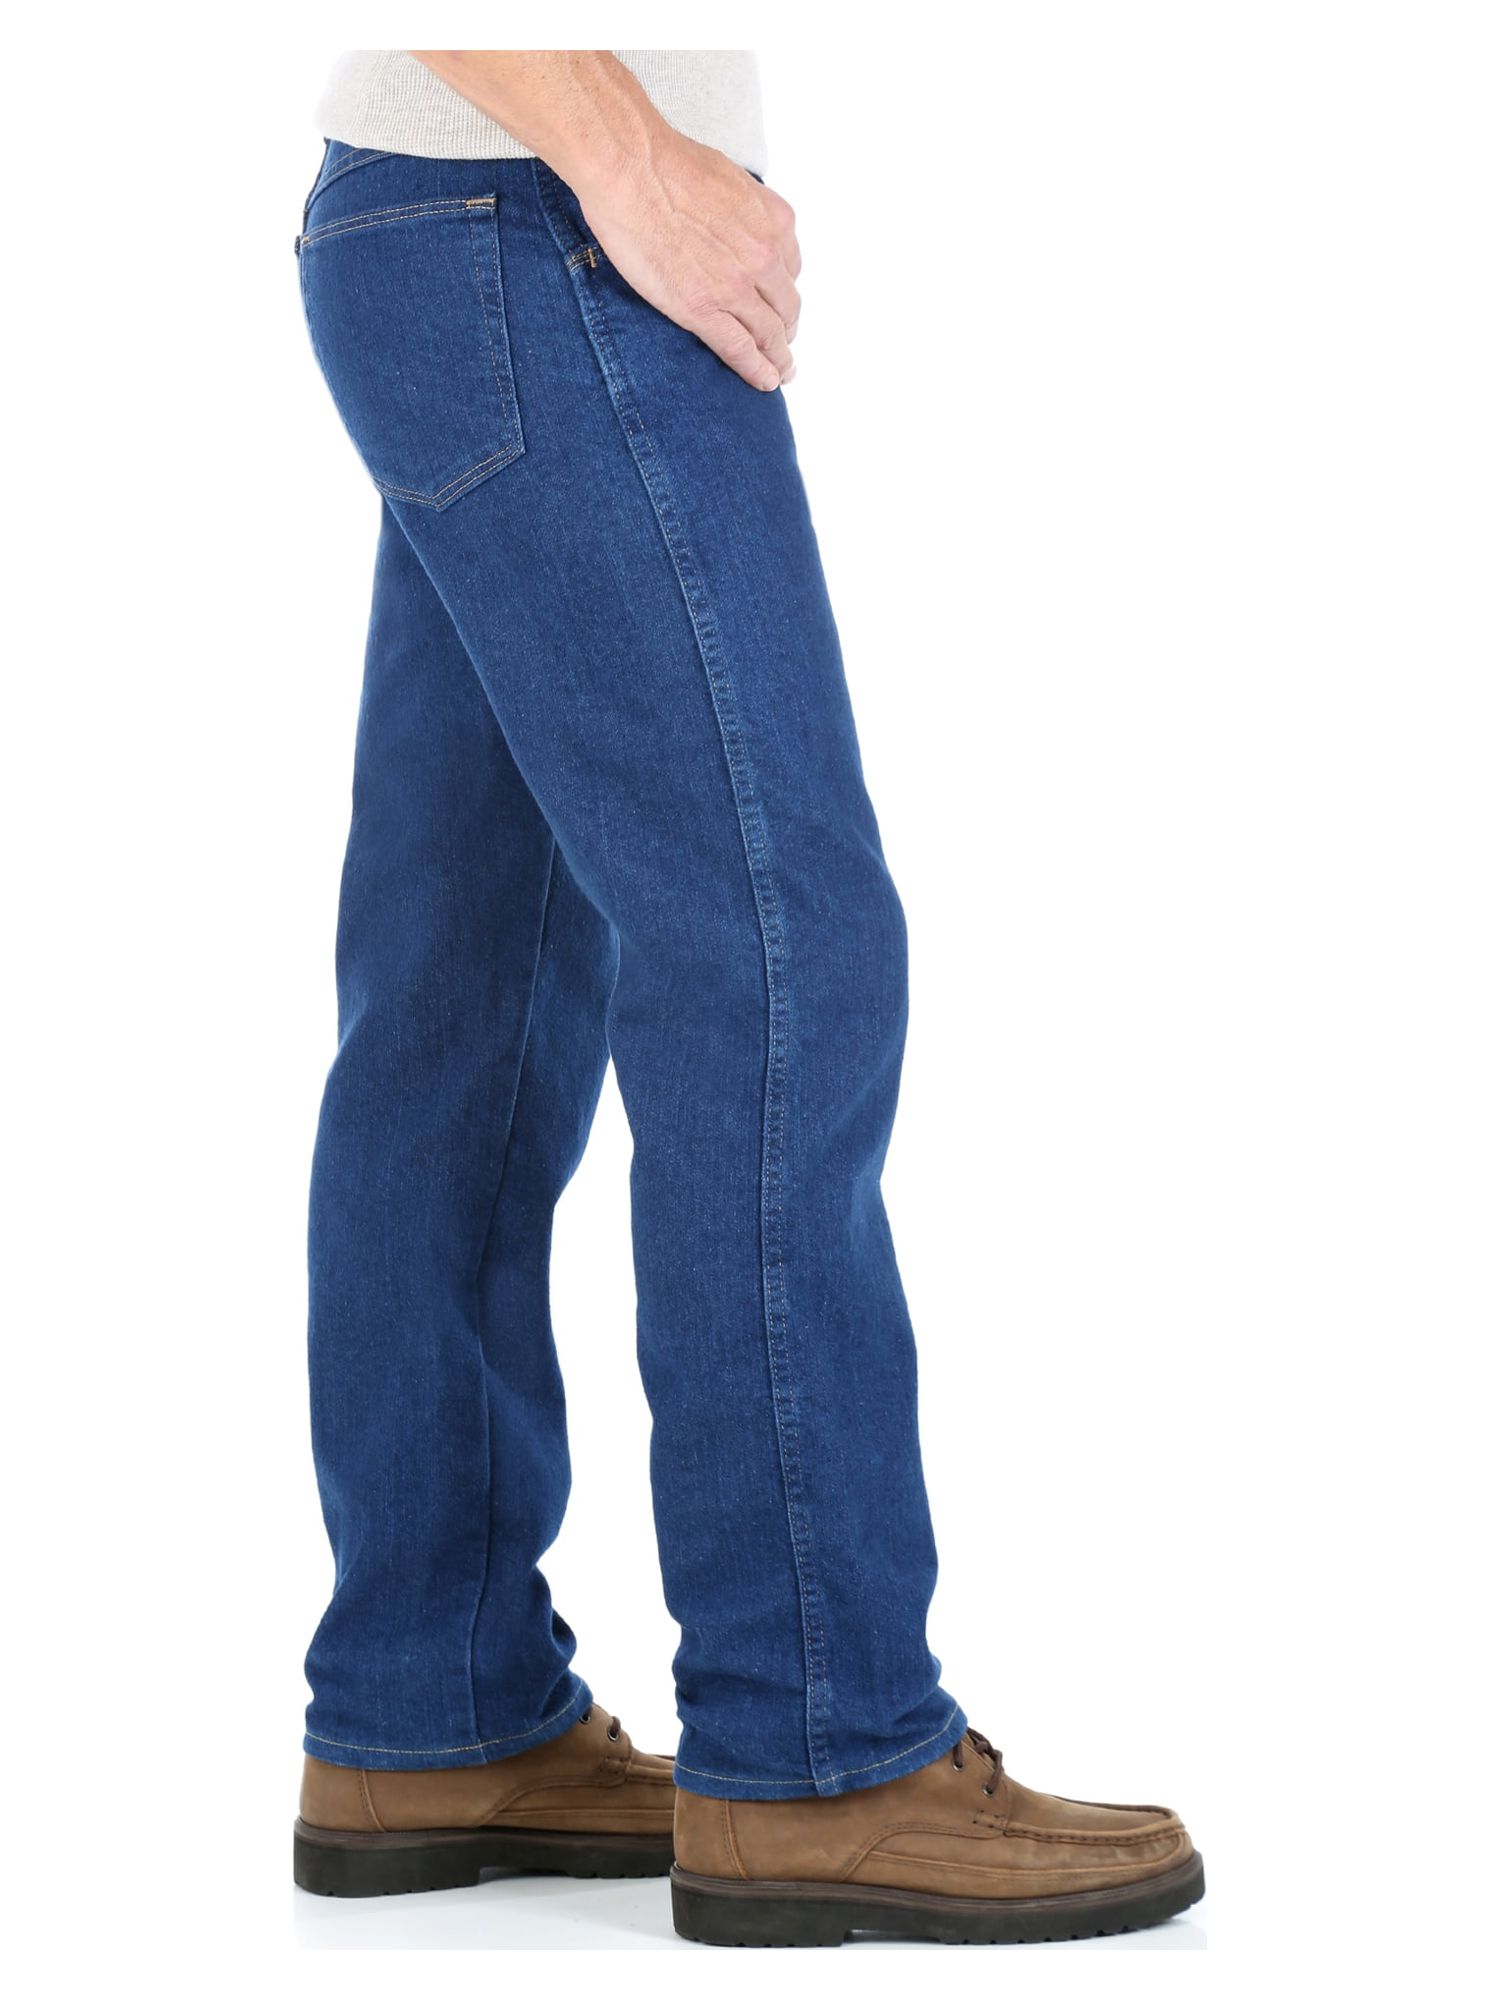 Wrangler Men's and Big Men's Performance Series Stretch Regular Fit Jean - image 3 of 4